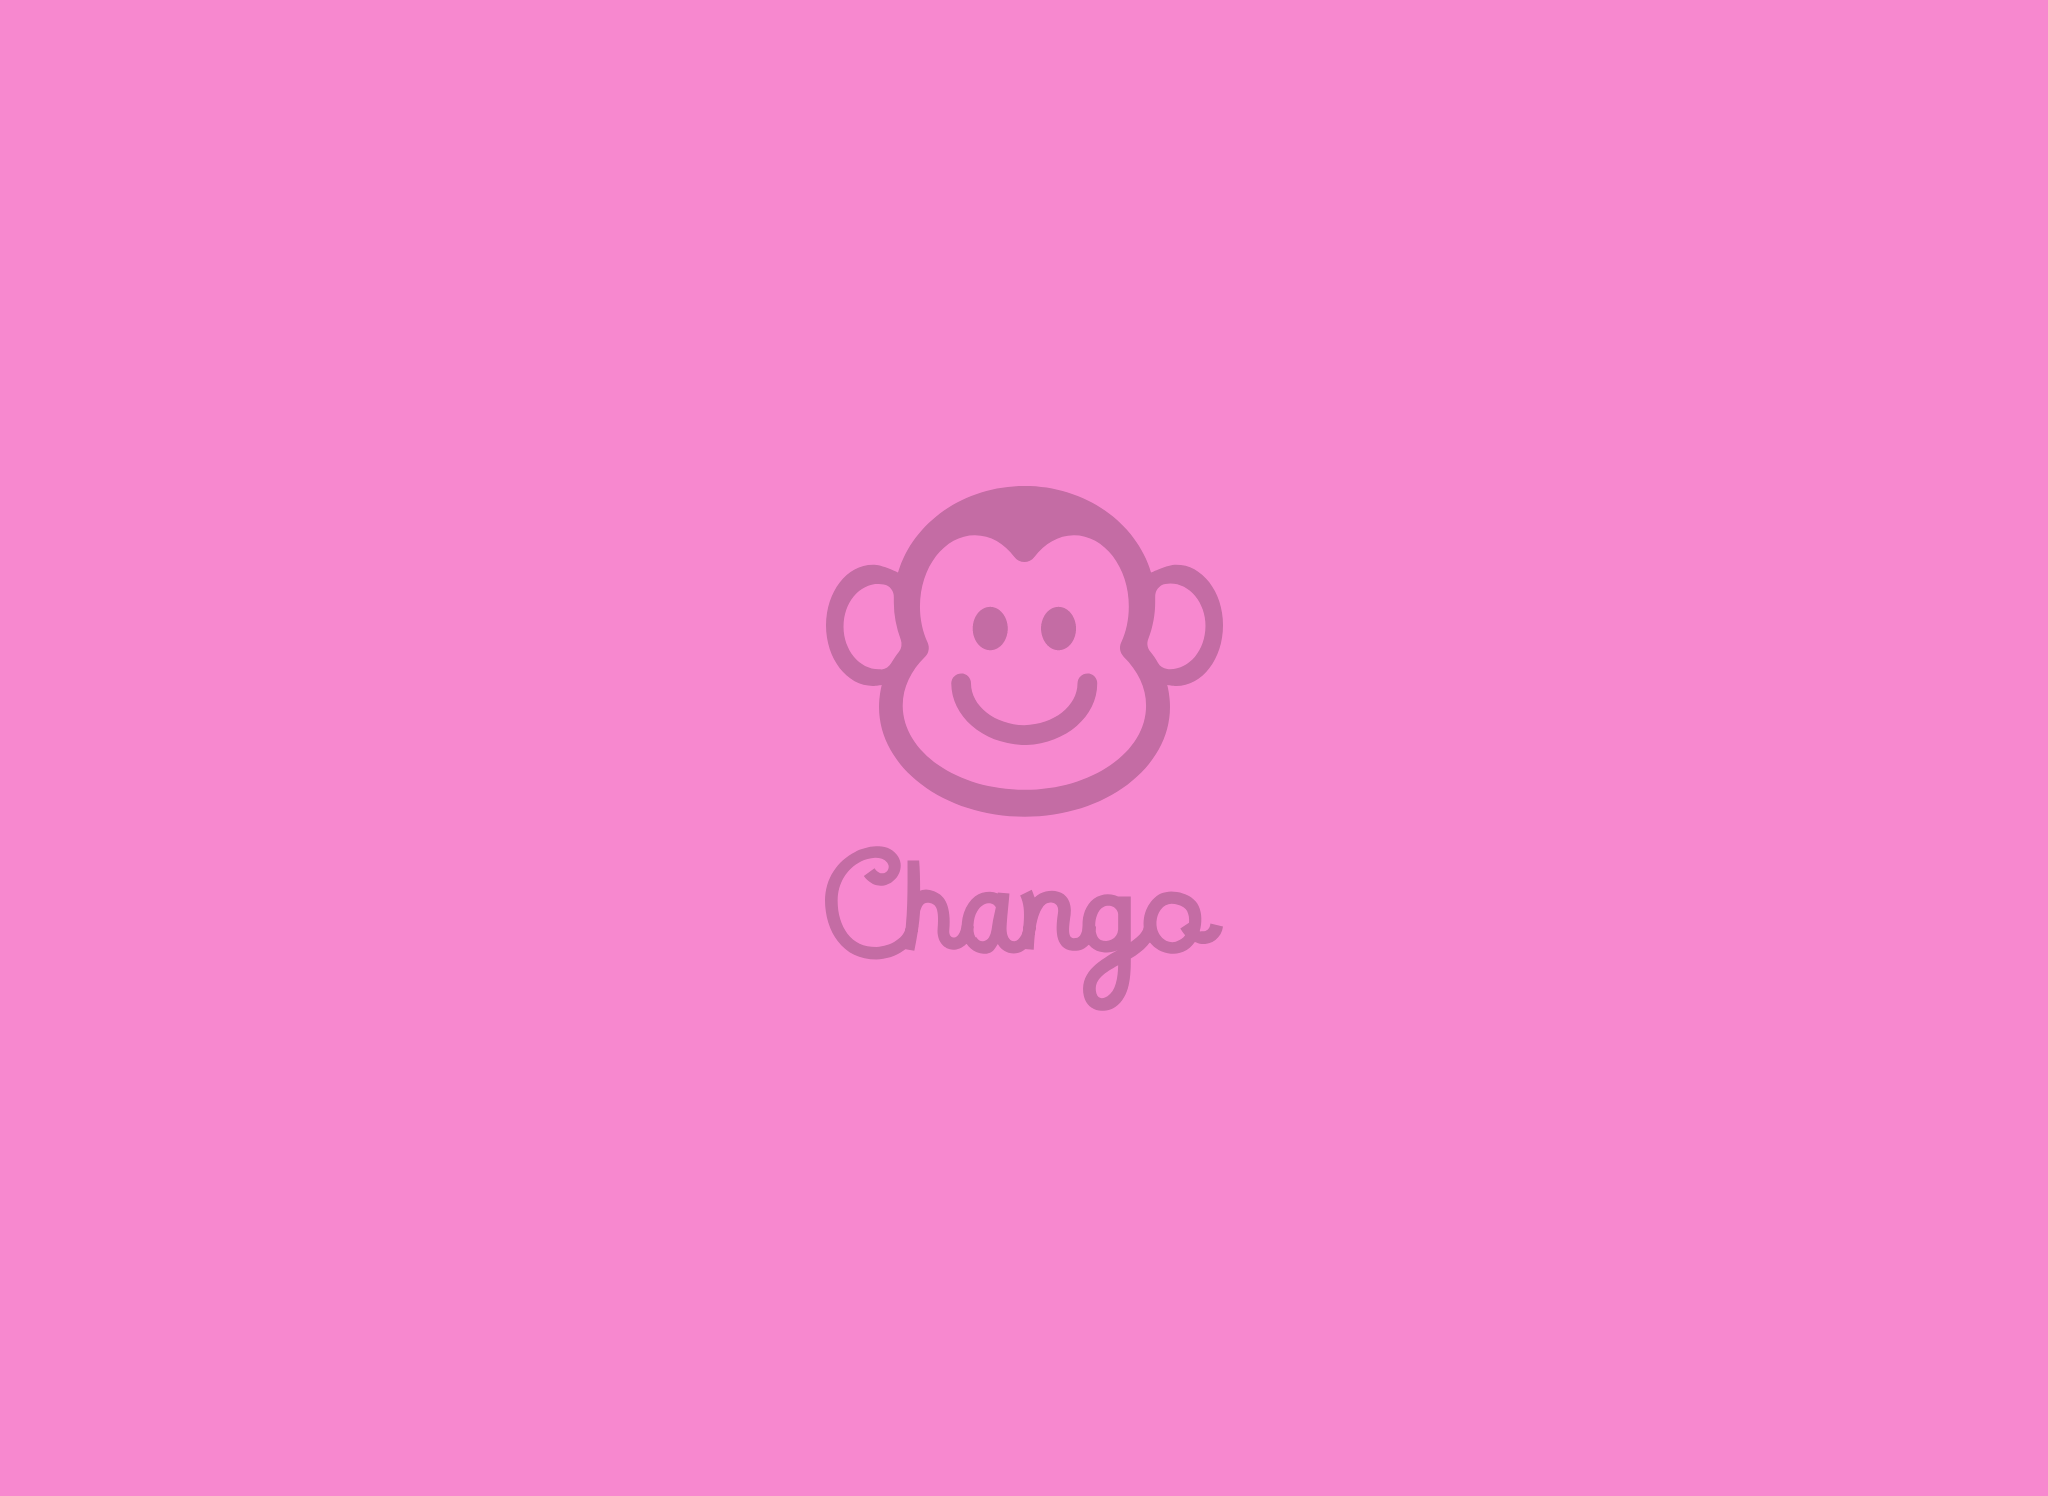 Chango Branding